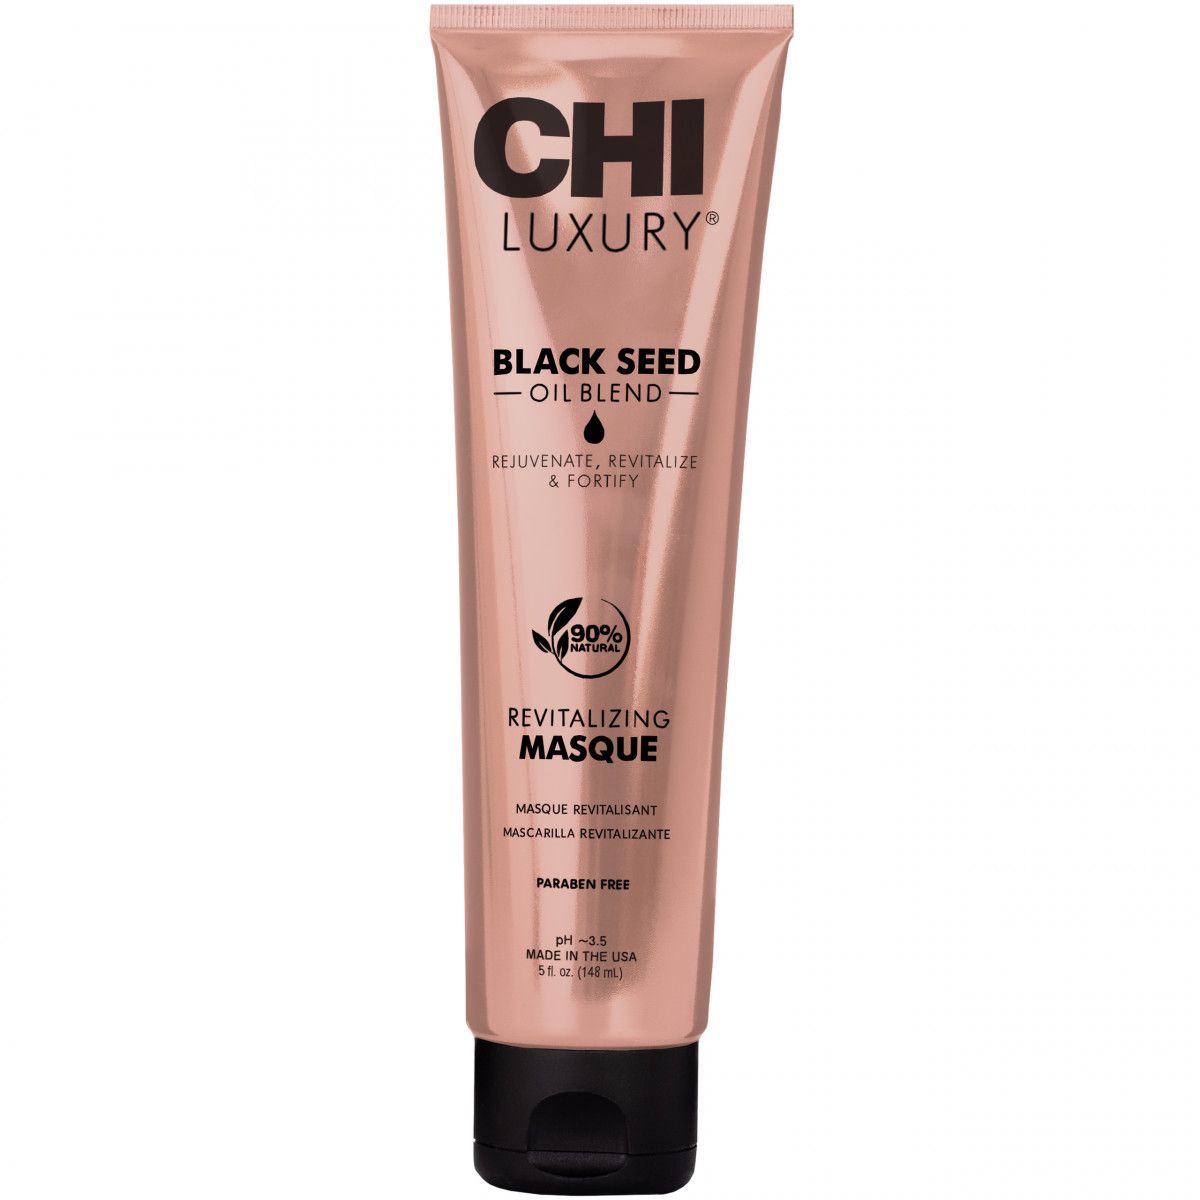 CHI Luxury Black Seed Oil Liquide Hydration, Maska nawilżająca 148ml